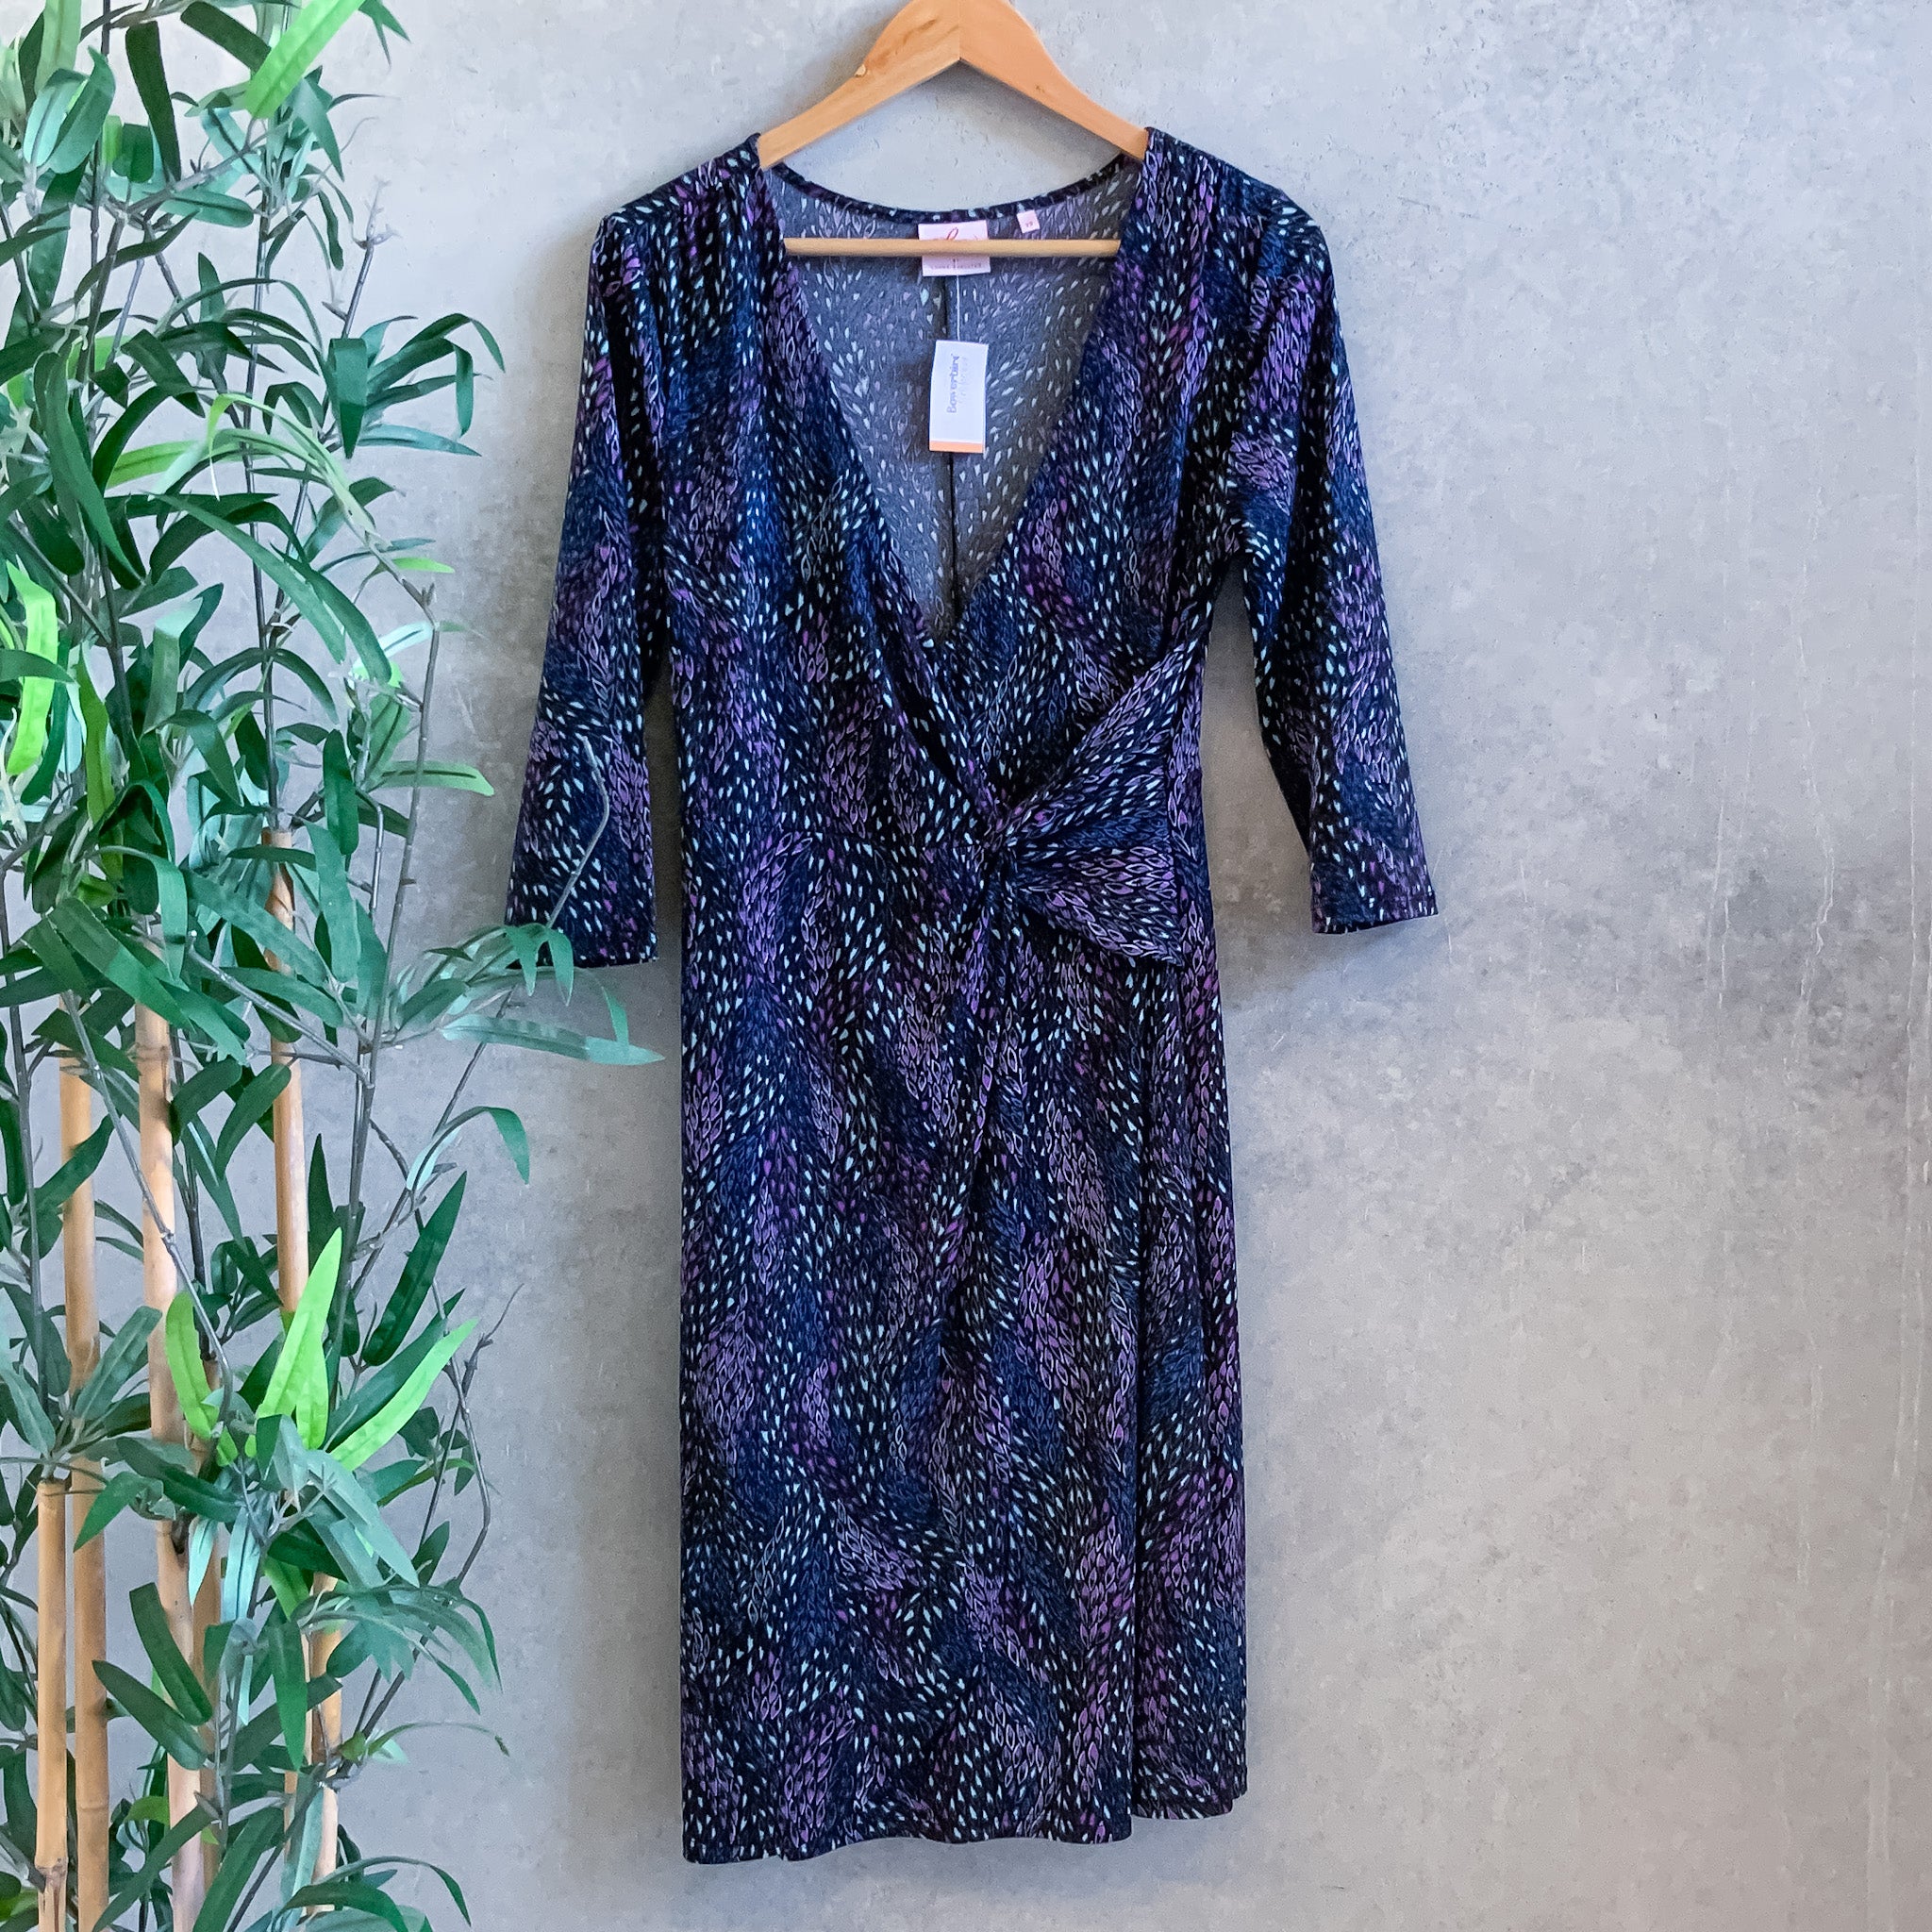 LEONA EDMISTON 3/4 Sleeve abstract Print Twist Detail Knee Length Dress - Size 12